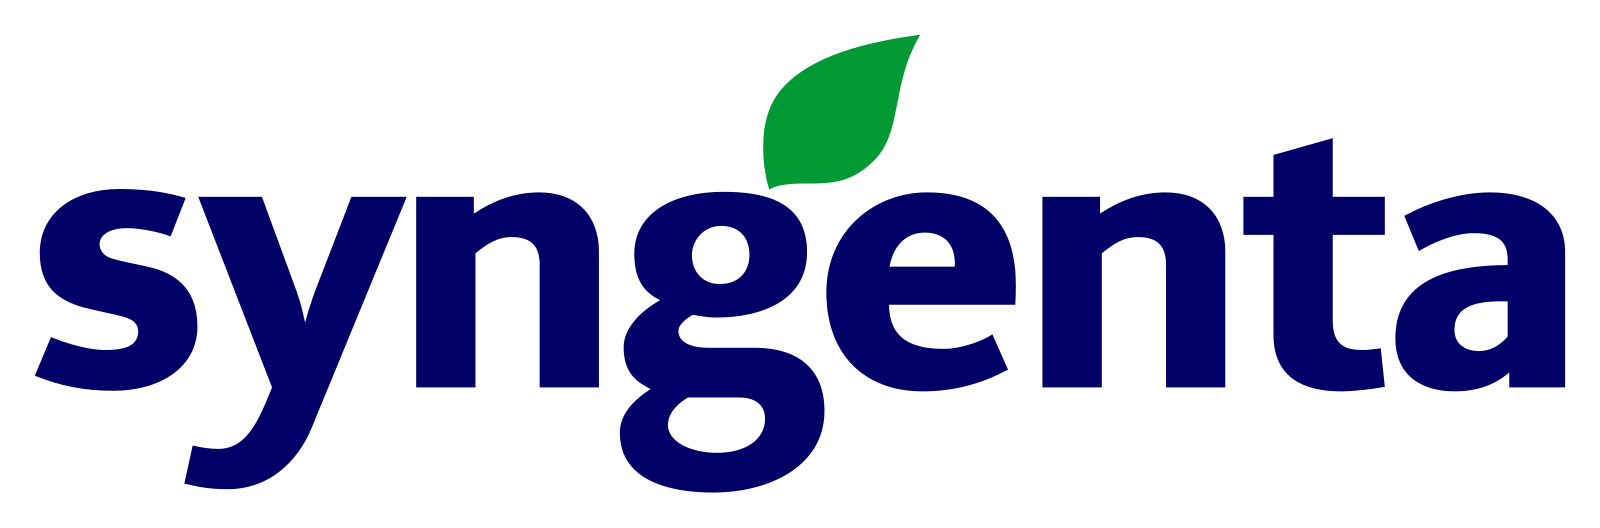 Syngenta company logo